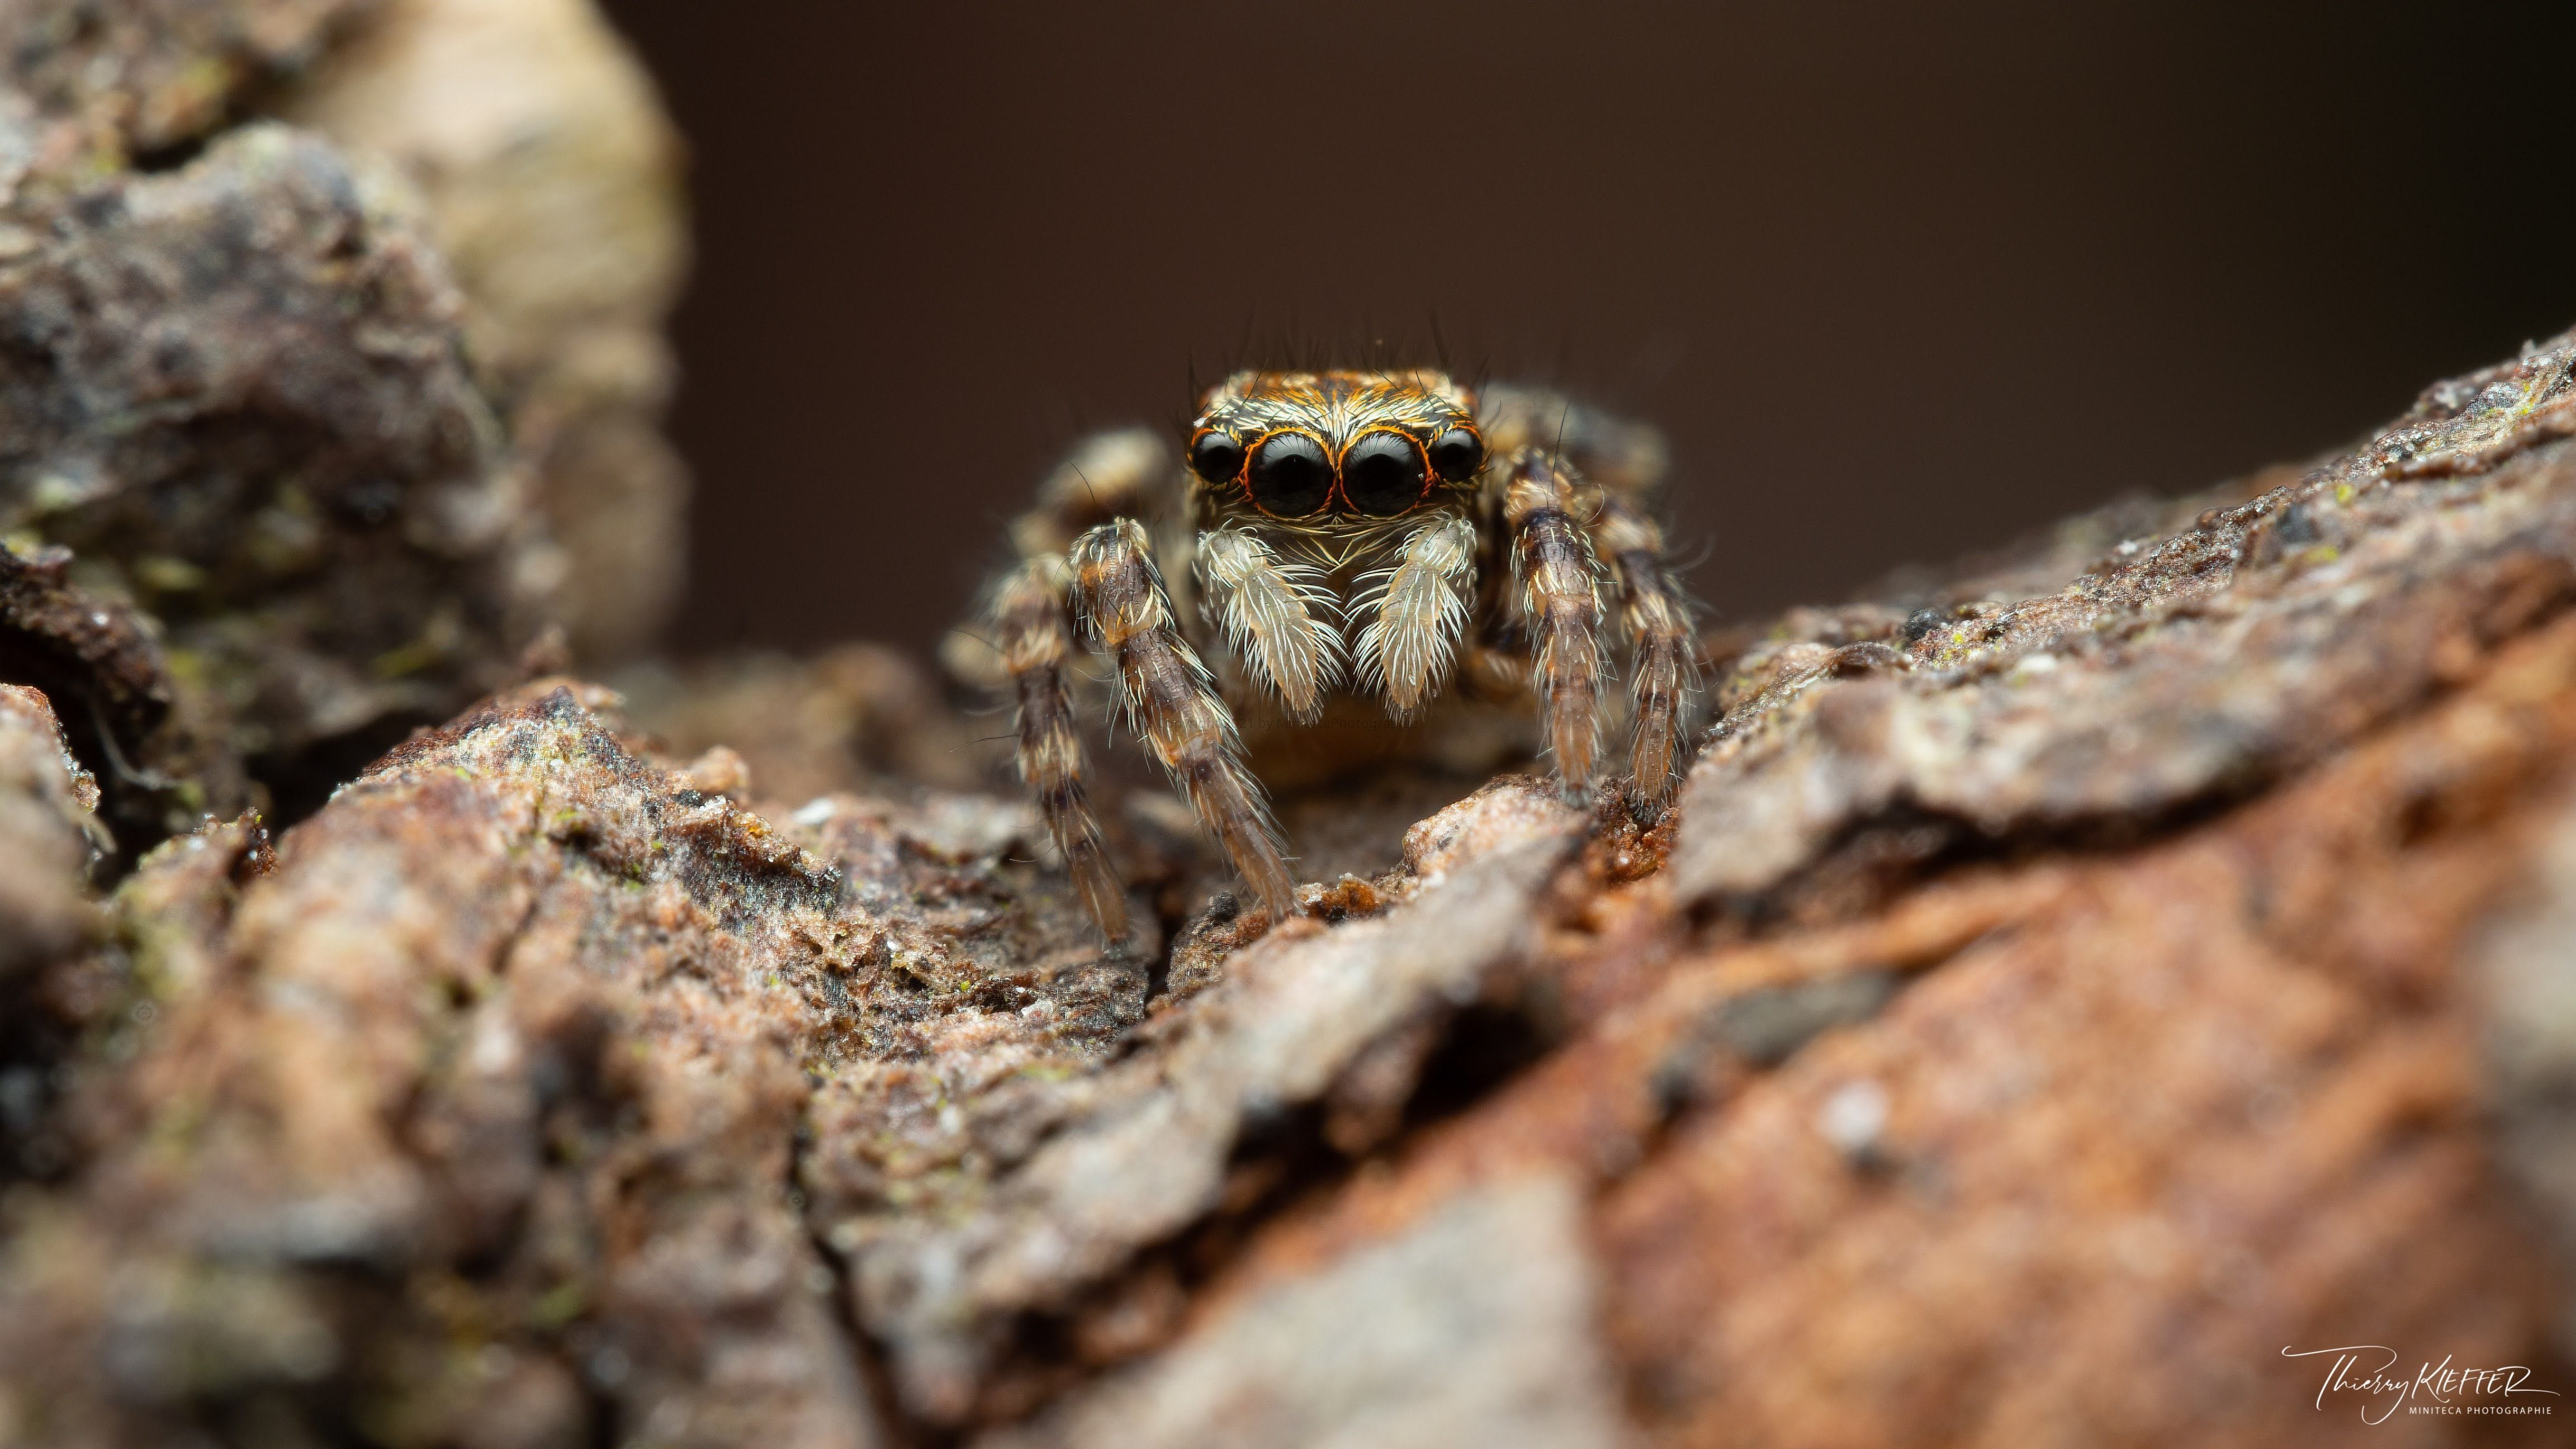 Pseudeuophrys lanigera juvenile jumping spider